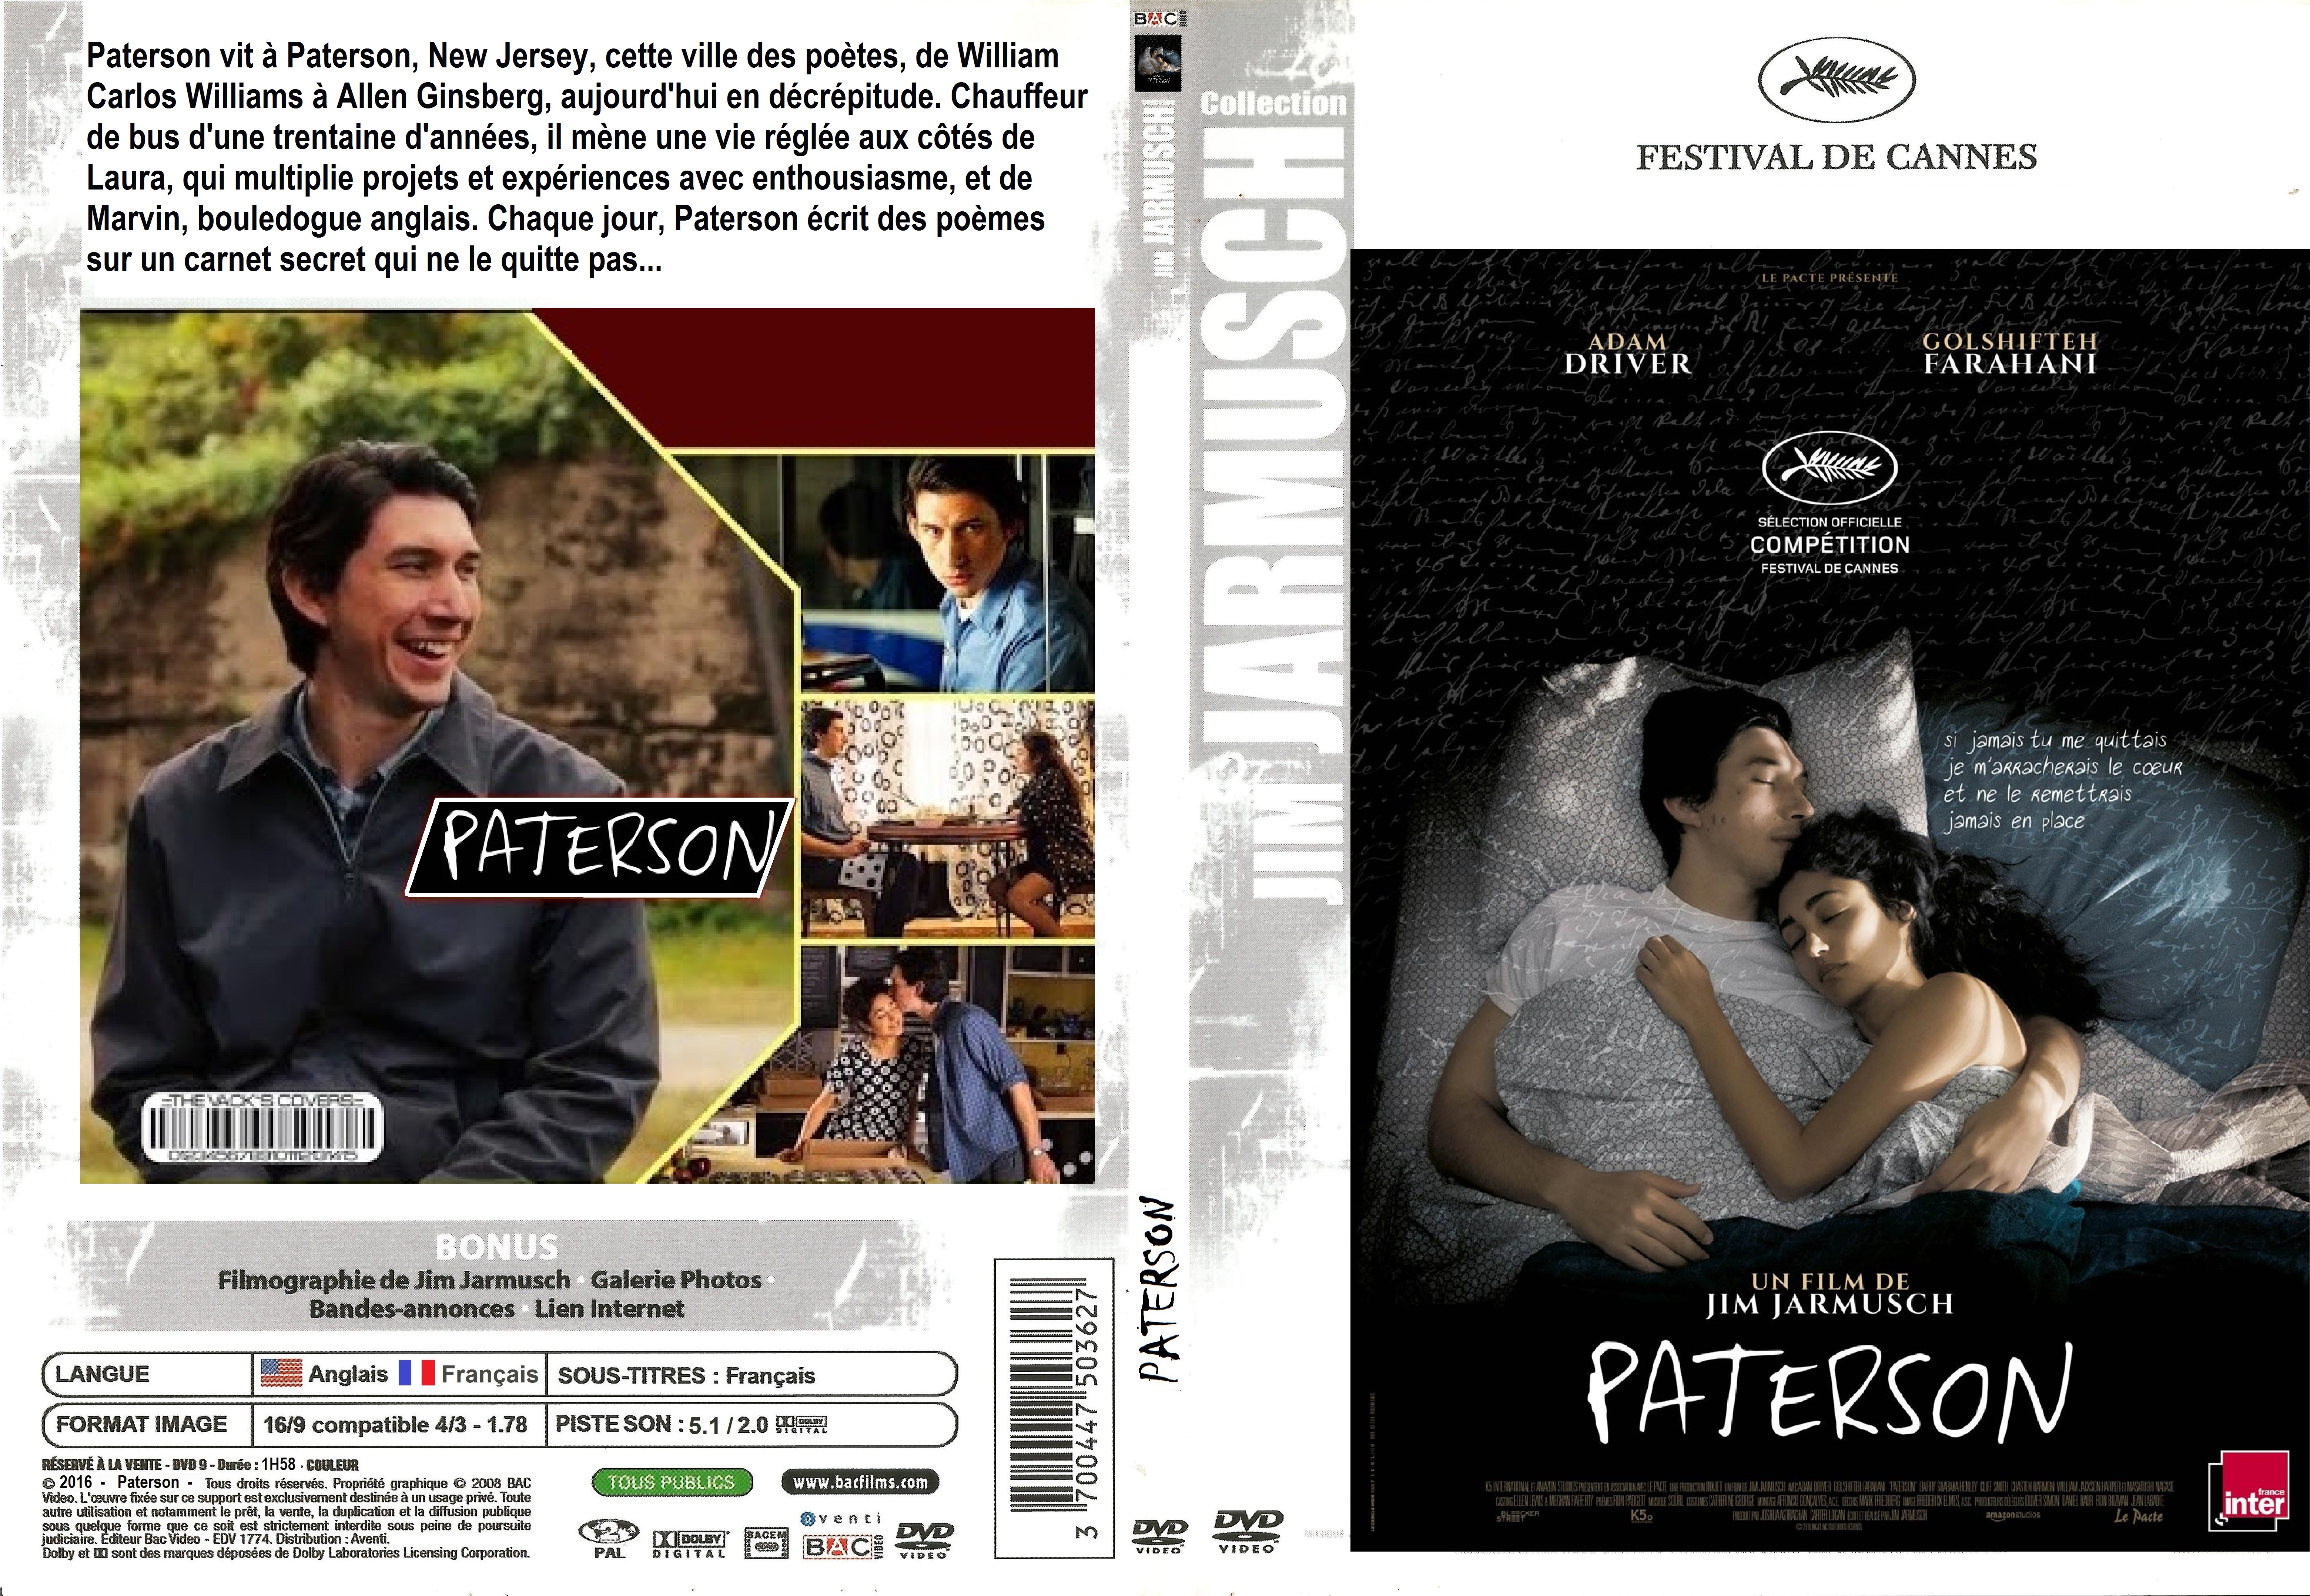 Jaquette DVD Paterson - SLIM custom